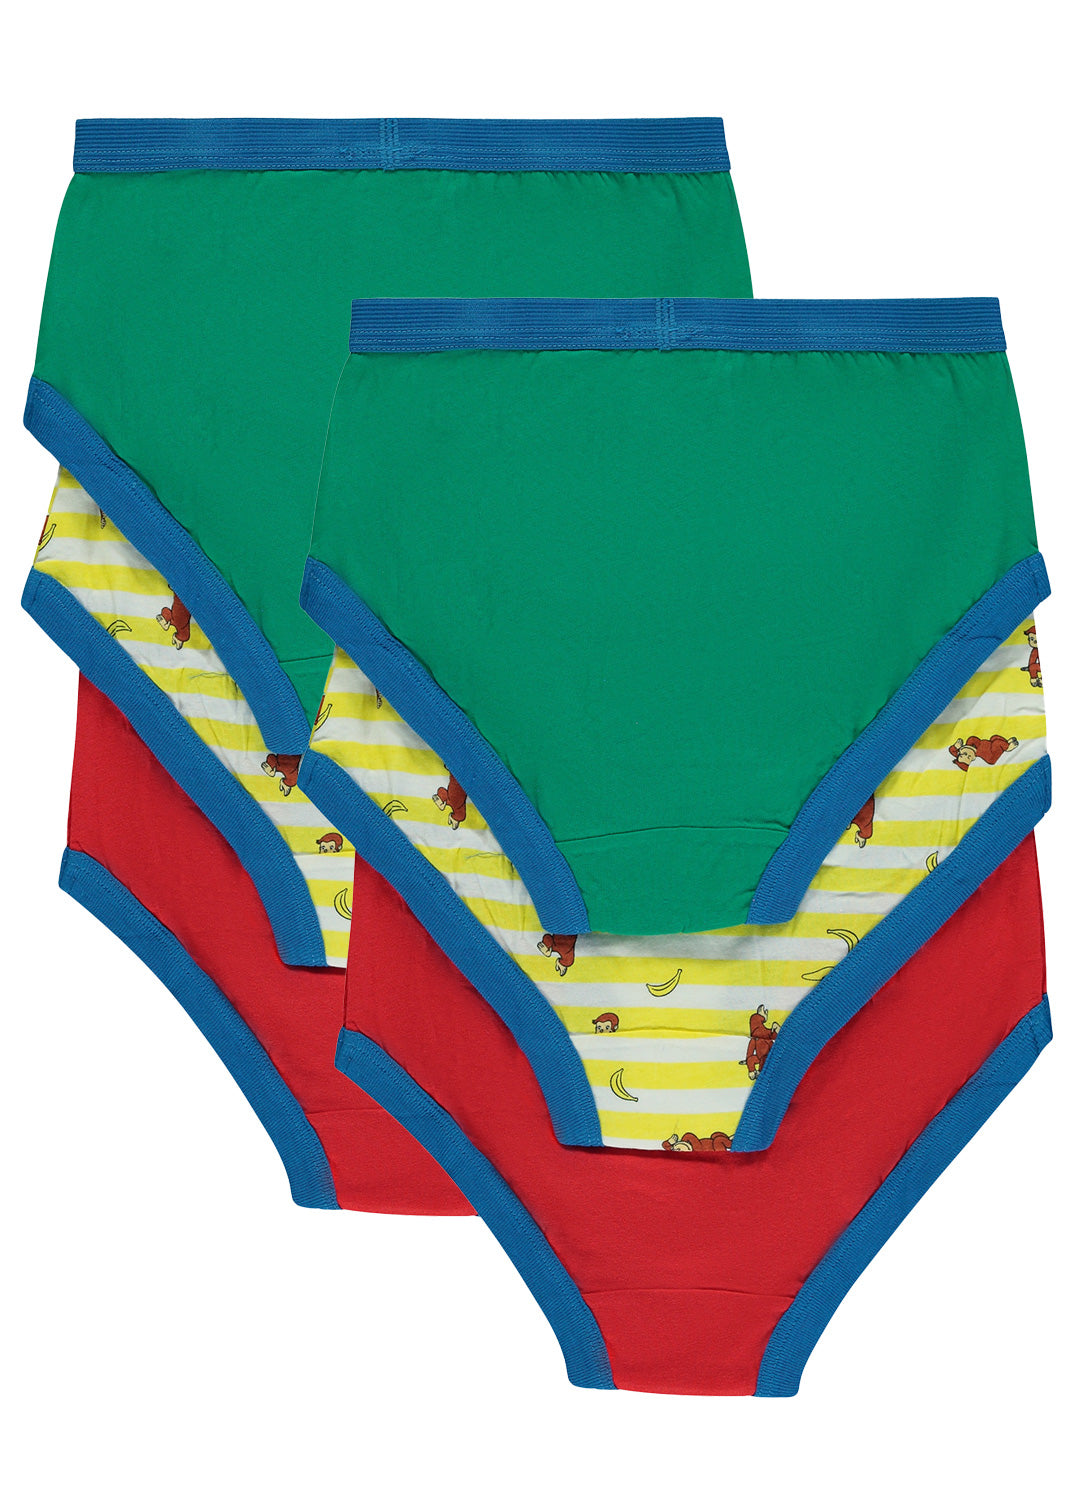 Boys Curious George Cotton Underwear - 6 Pack